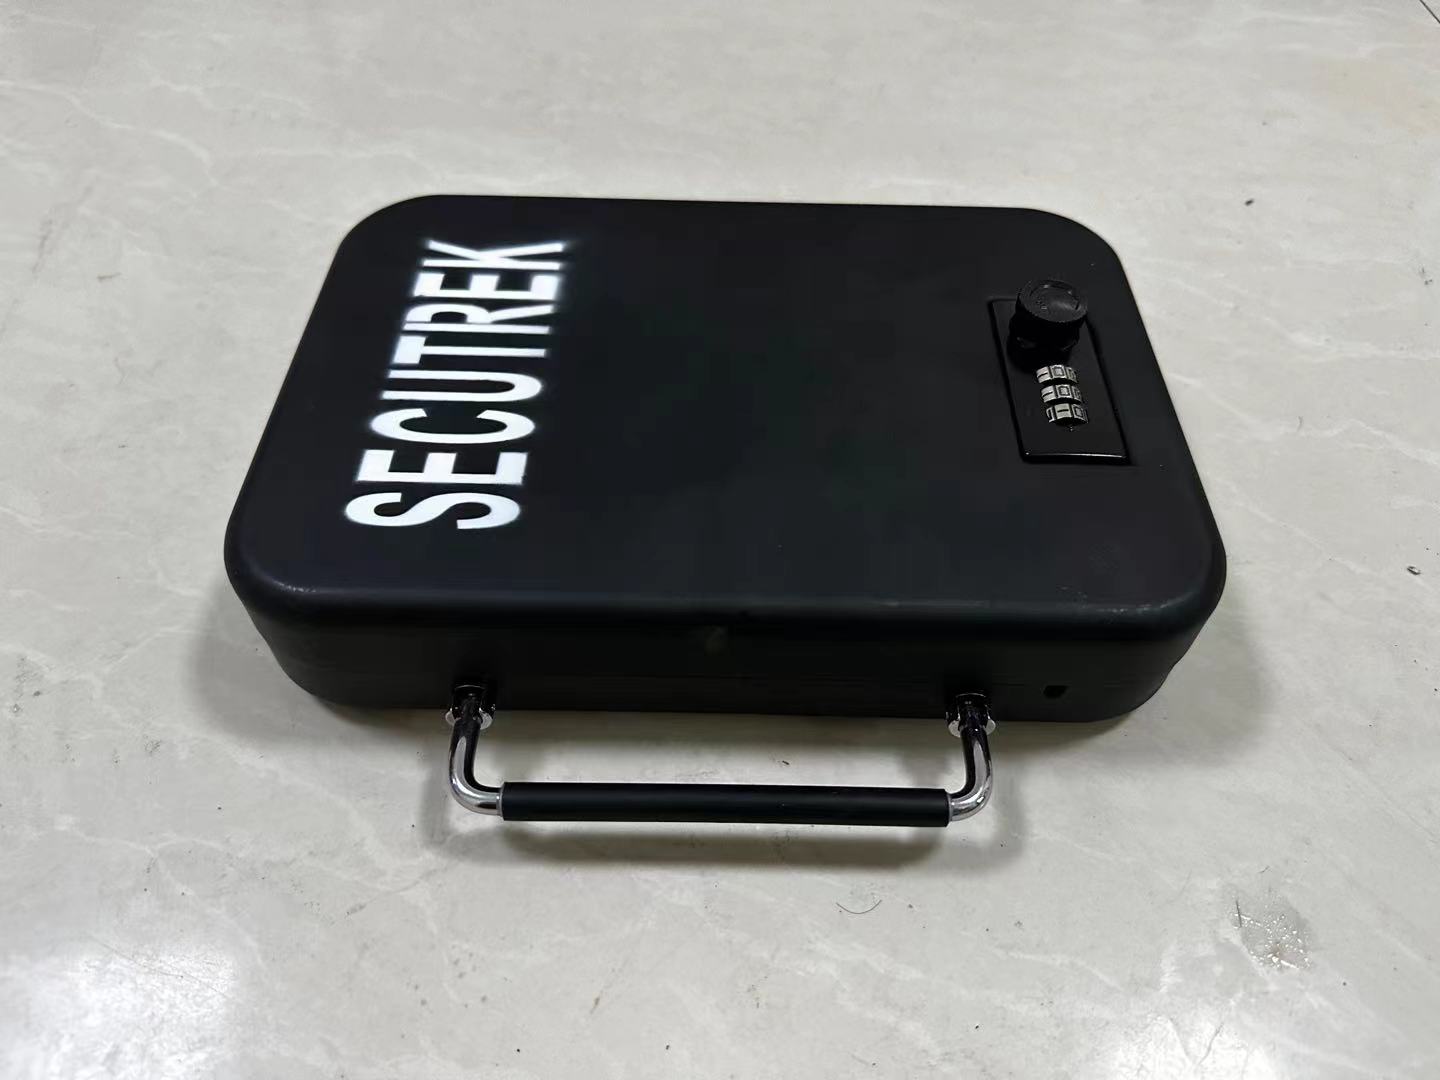 SECUTREK ST1 Biometric Gun Safes for Pistols, Portable Hangun Safe for Home or Car, with Battery Display, Backlit Keypad, USB-C Port, 3 Quick Access Methods - Fingerprint/PIN Code/Backup Key